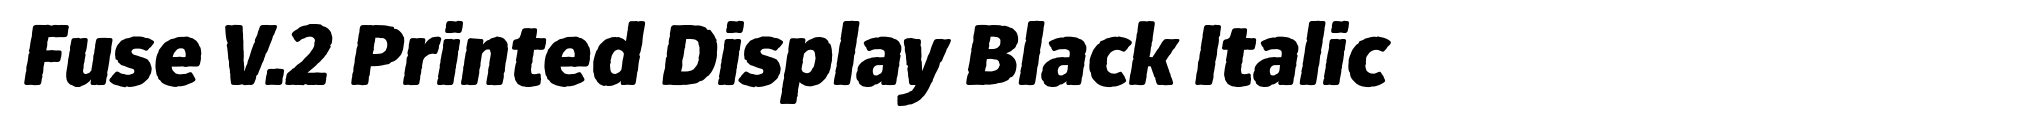 Fuse V.2 Printed Display Black Italic image